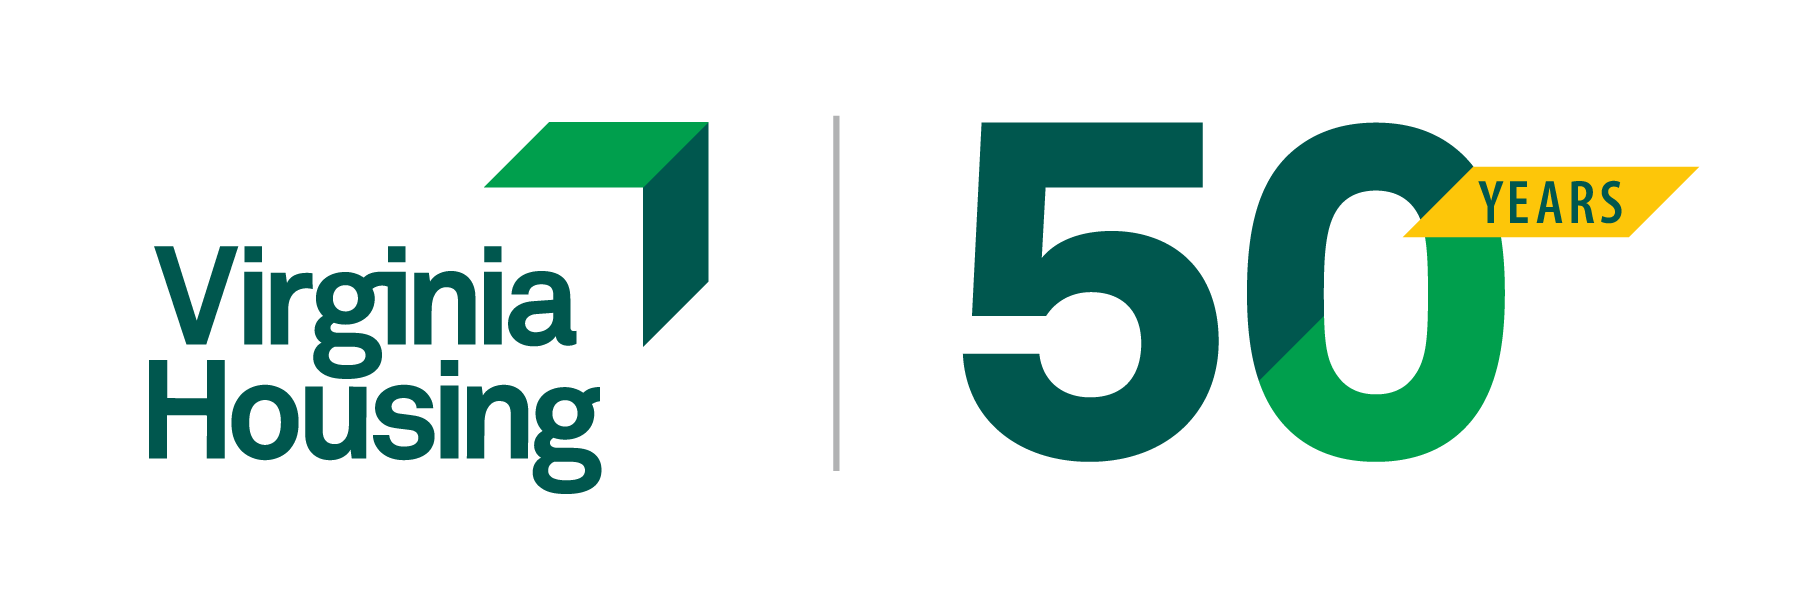 VH-logo-50-years